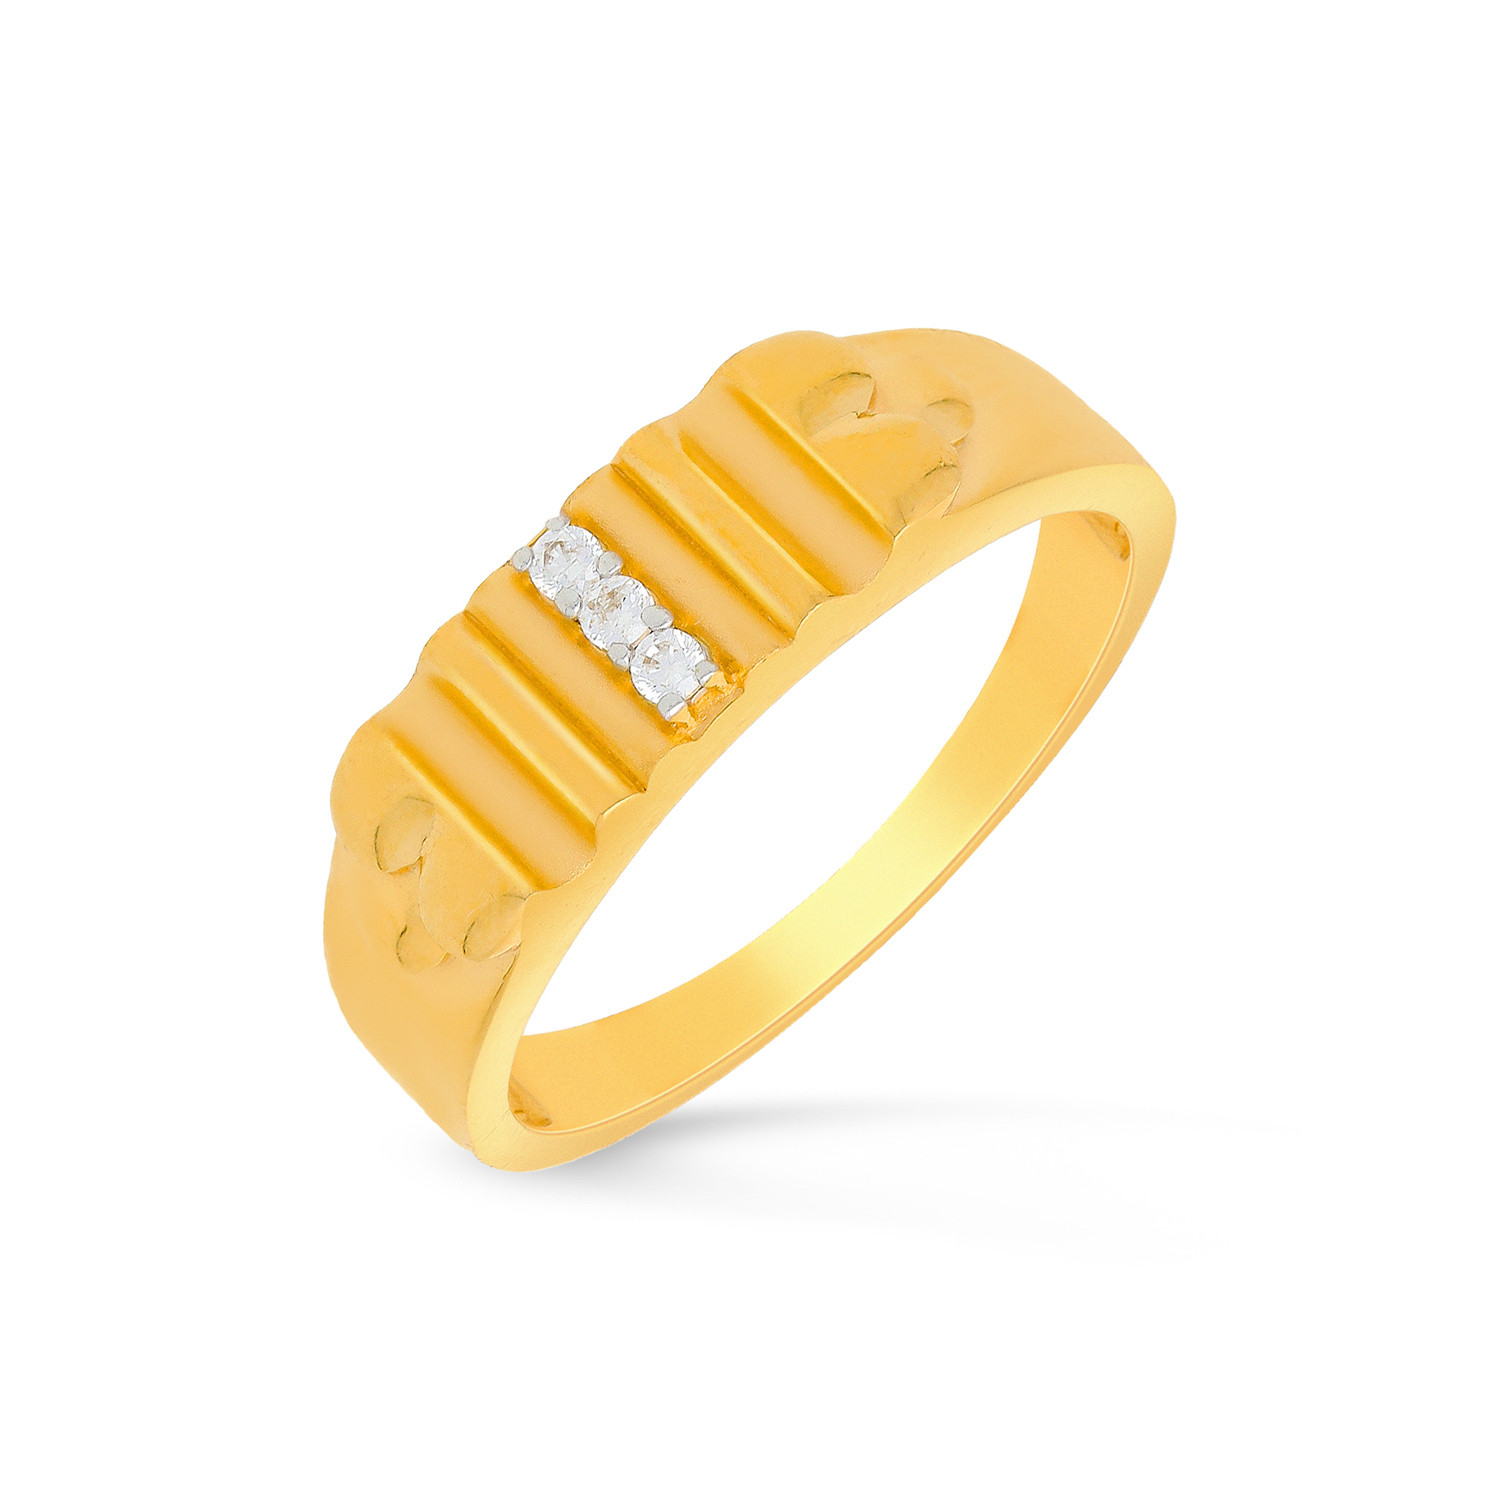 Buy Malabar Gold Ring RG1178398 for Men Online | Malabar Gold & Diamonds